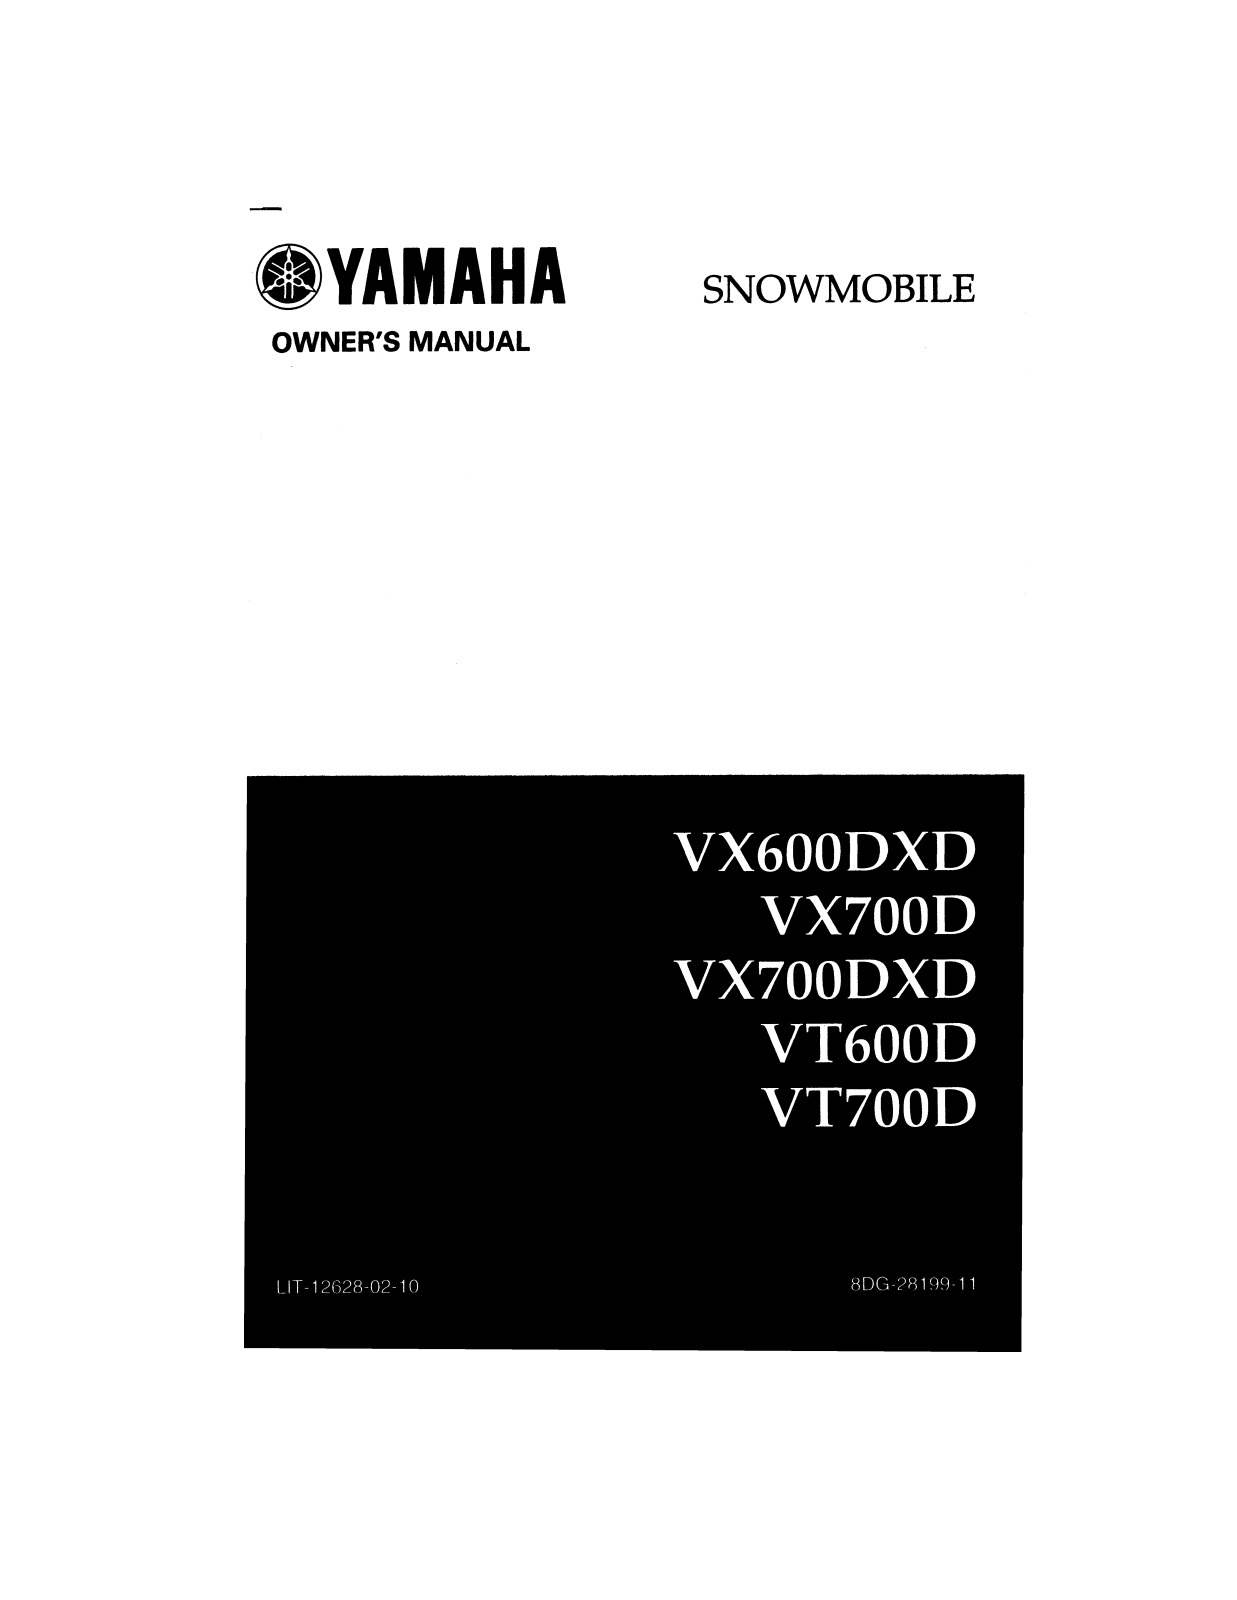 Yamaha VMAX 700 DELUXE, VMAX 600 DELUXE, VMAX 700 Manual